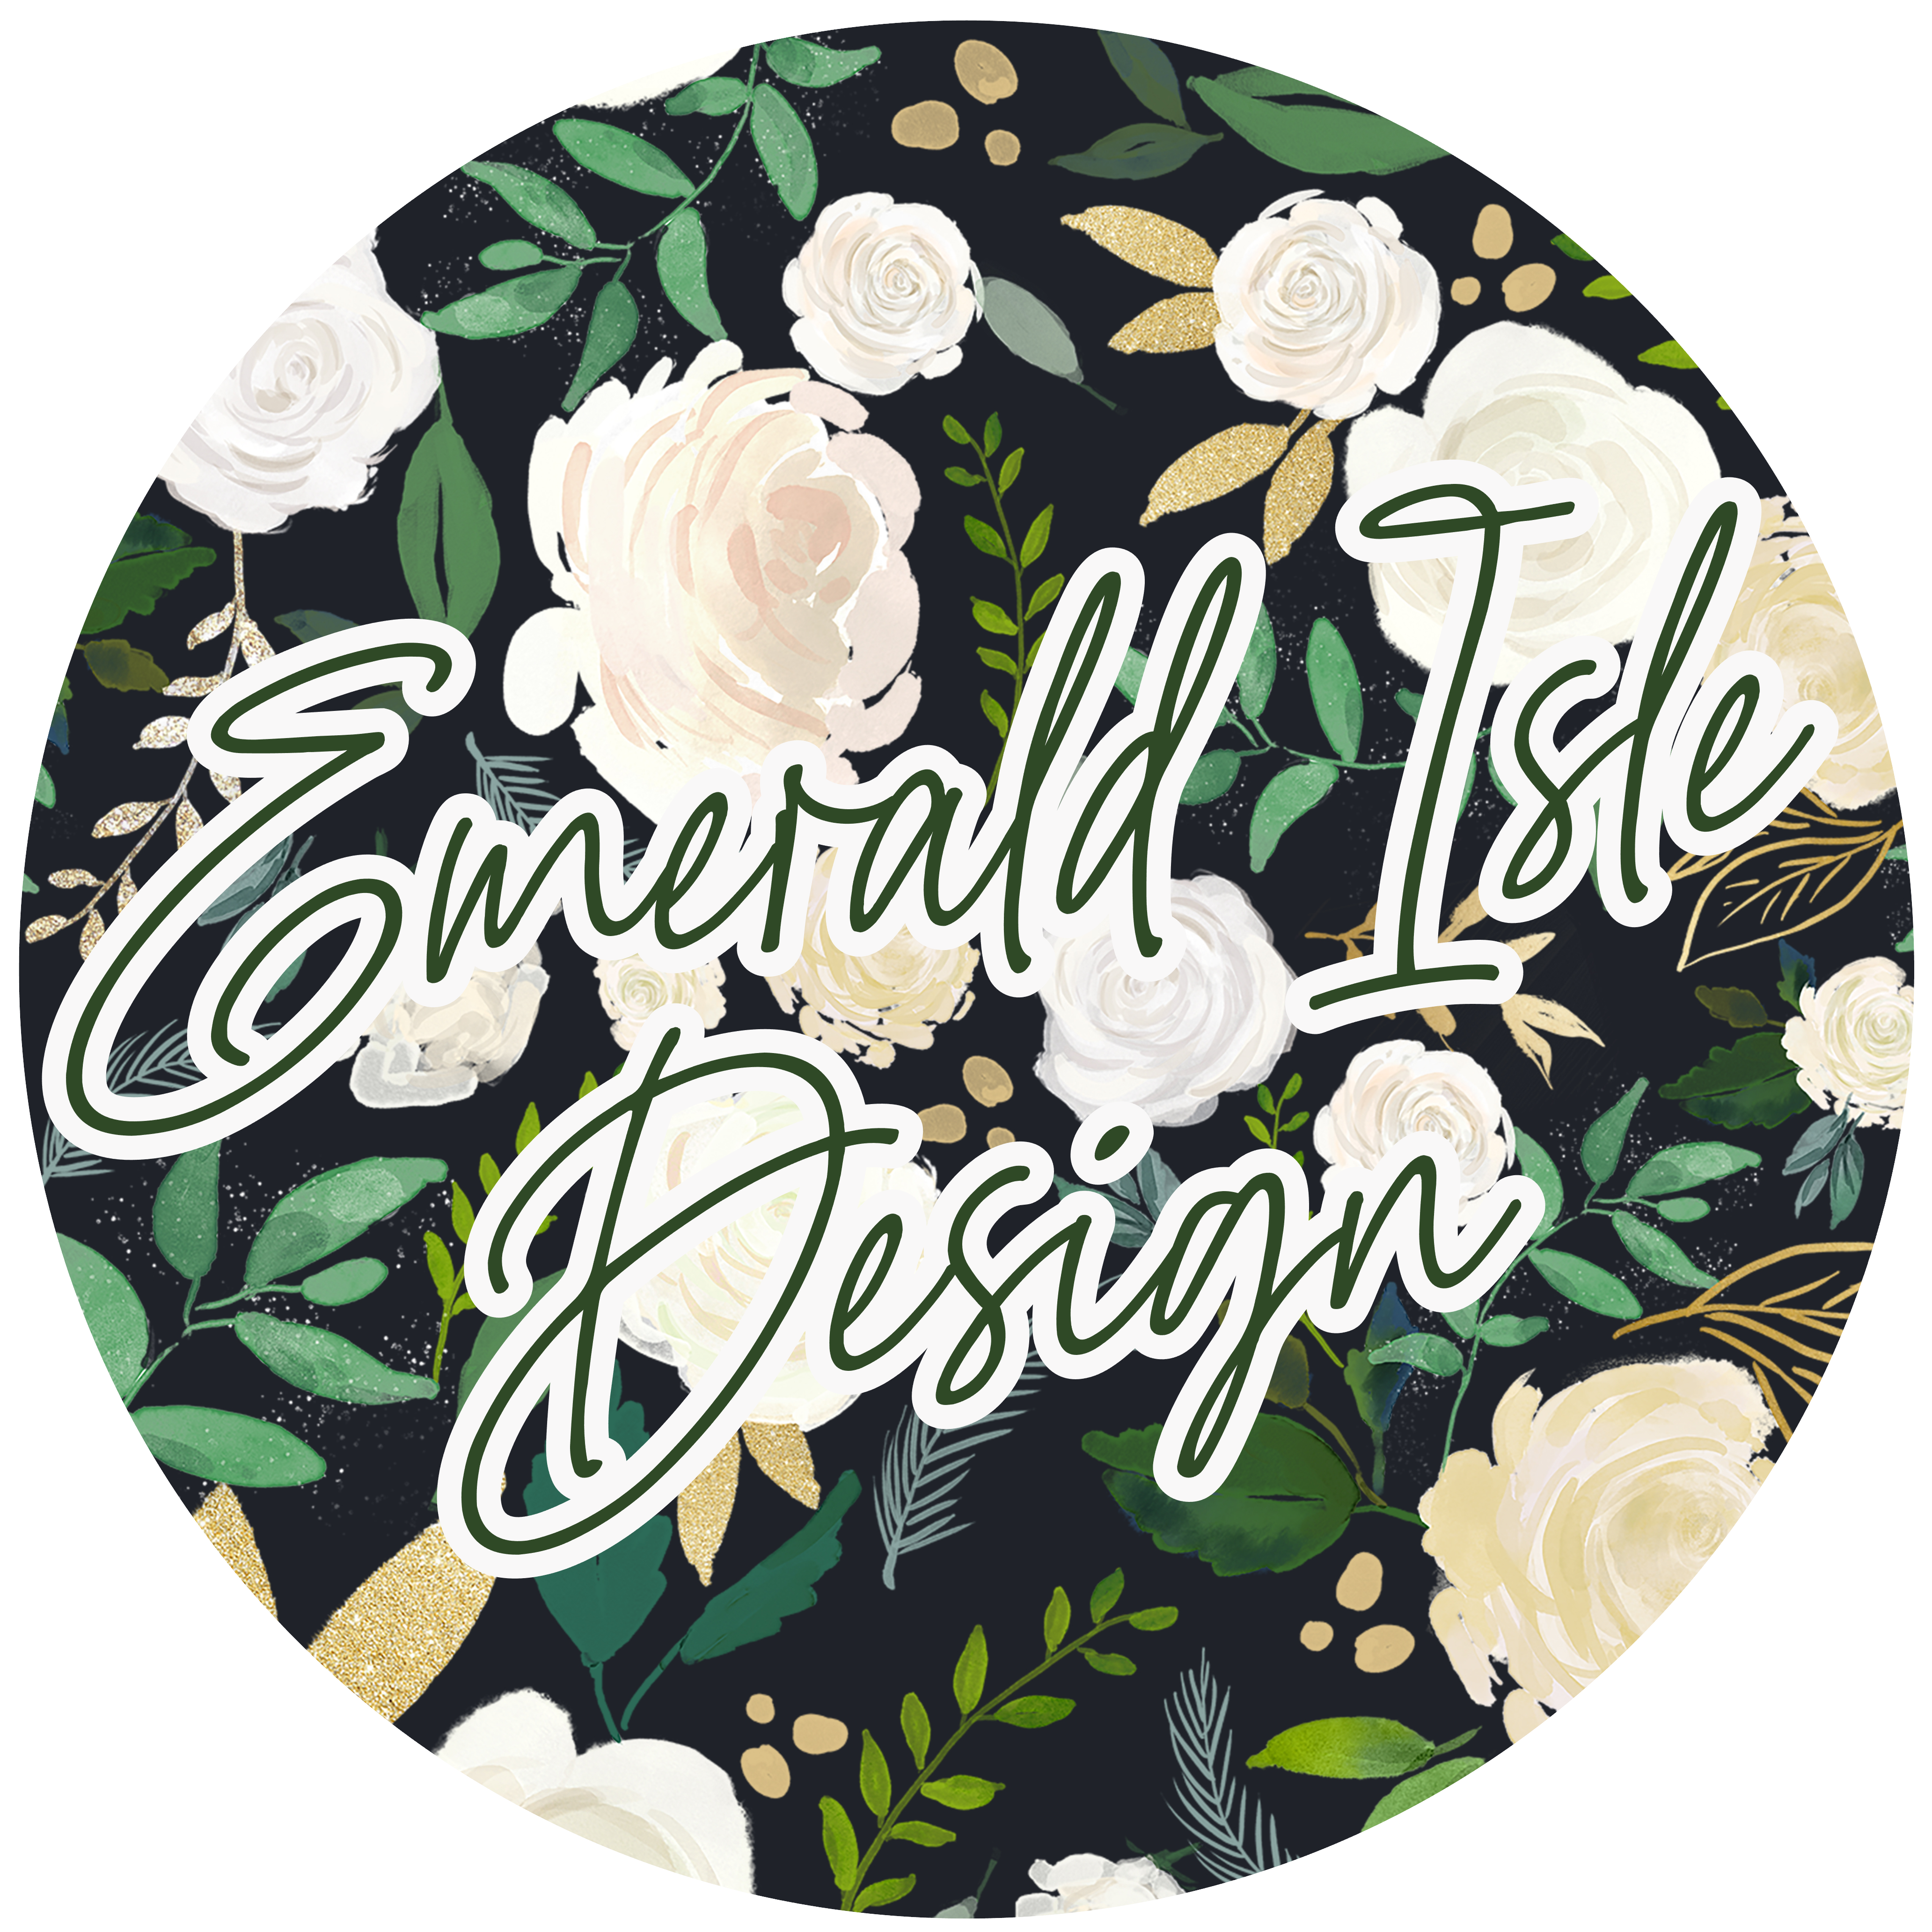 Emerald Isle Design